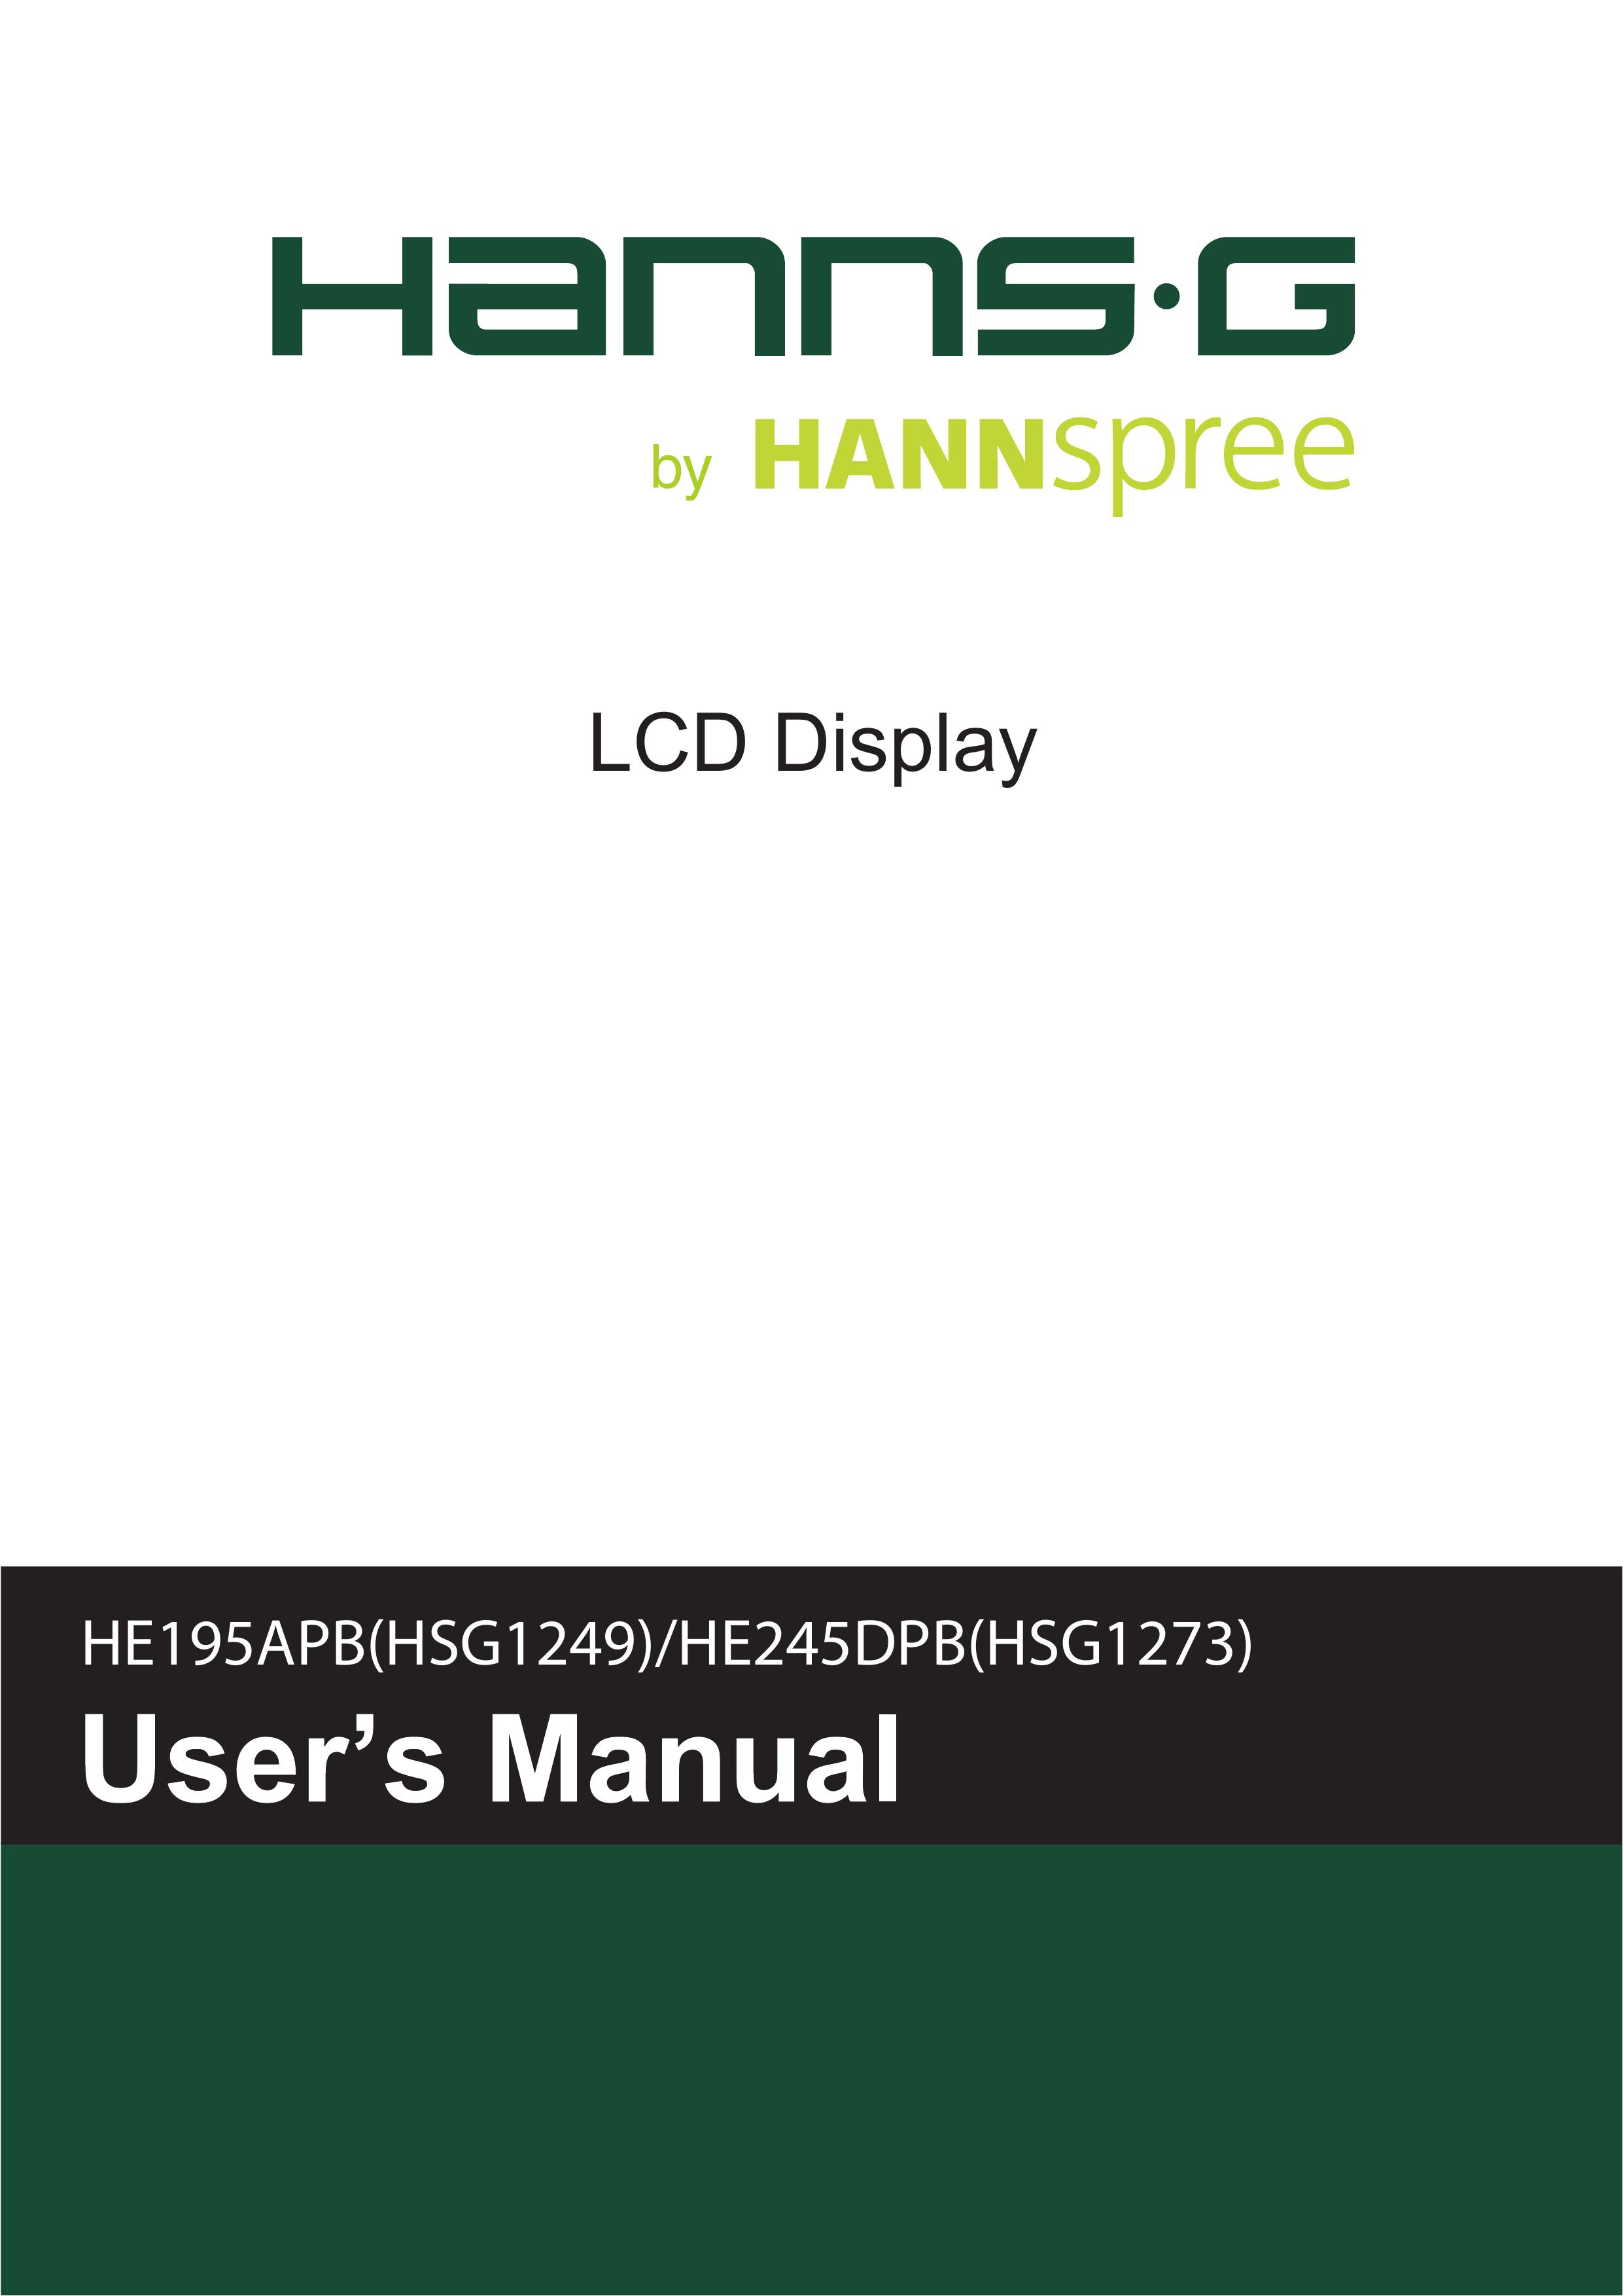 HANNspree HE195APB(HSG1249) Digital Photo Frame User Manual